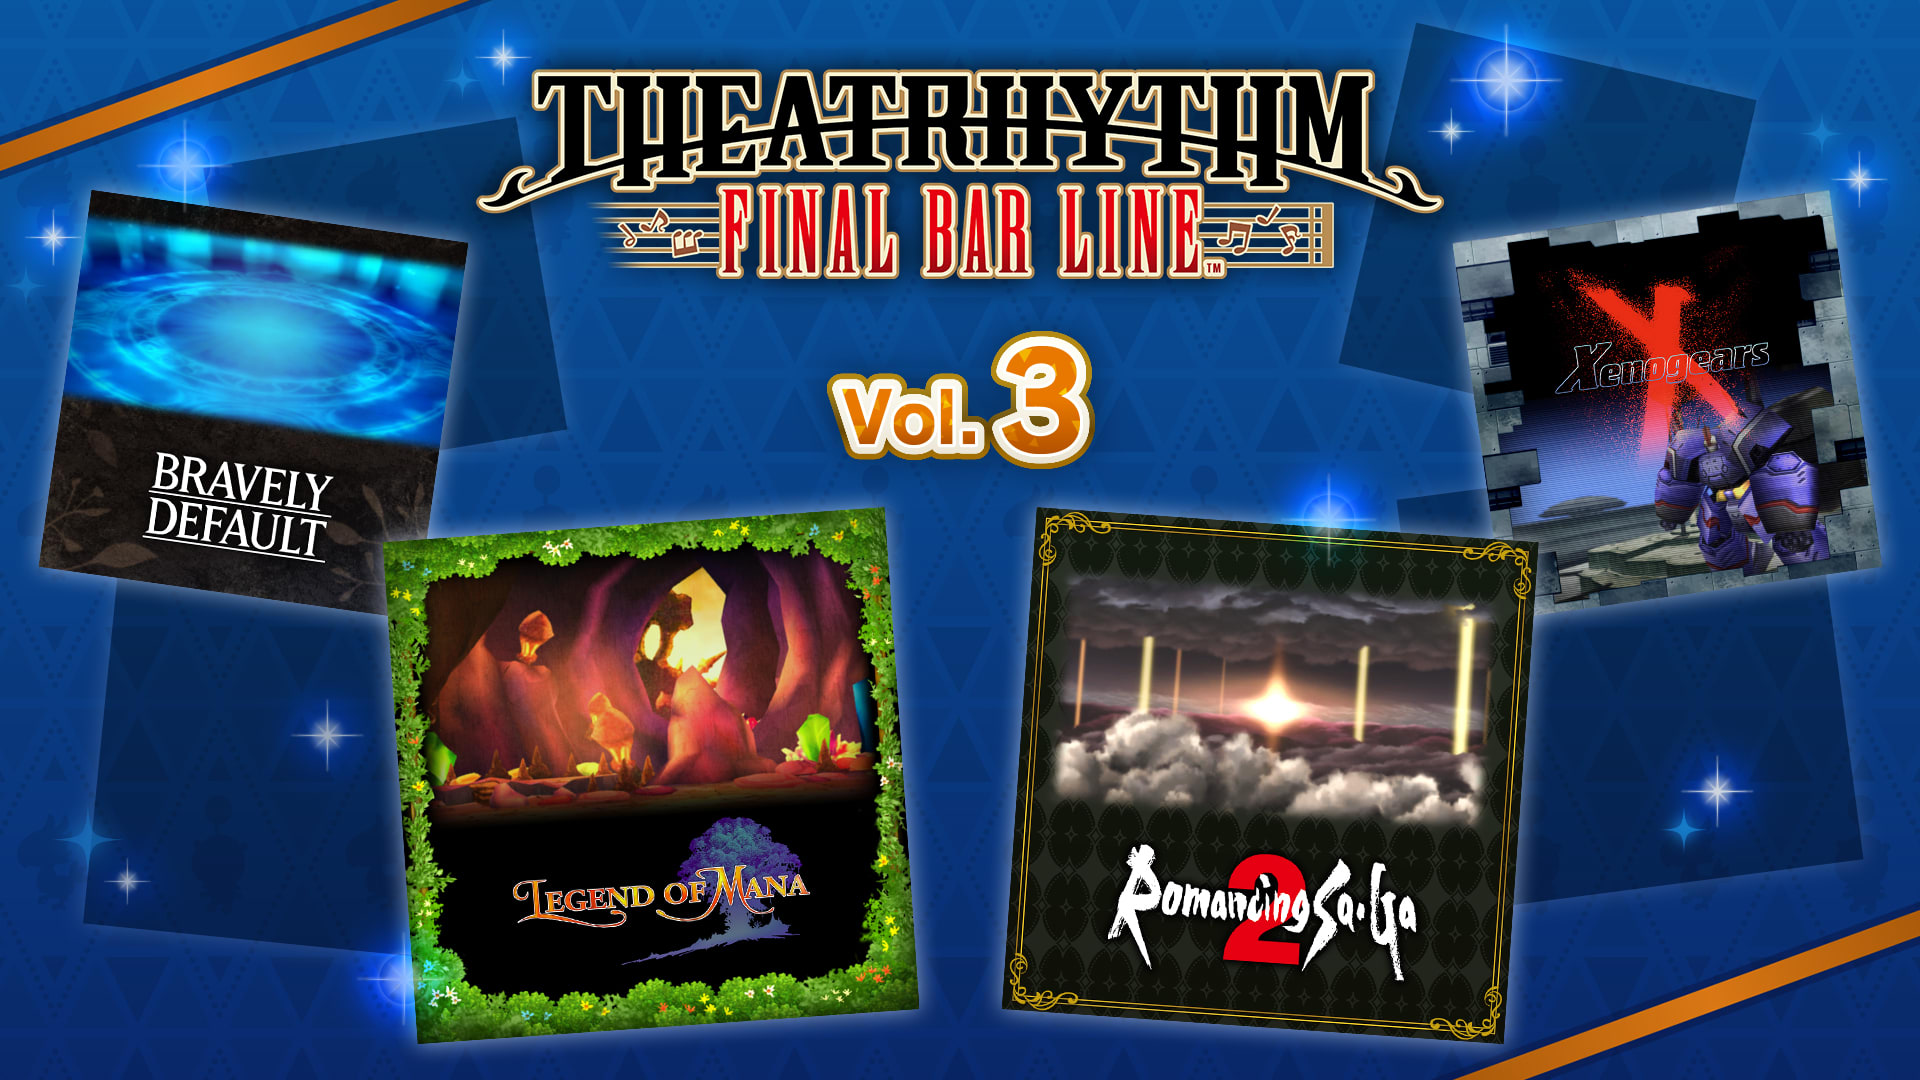 THEATRHYTHM FINAL BAR LINE Season Pass Vol. 3